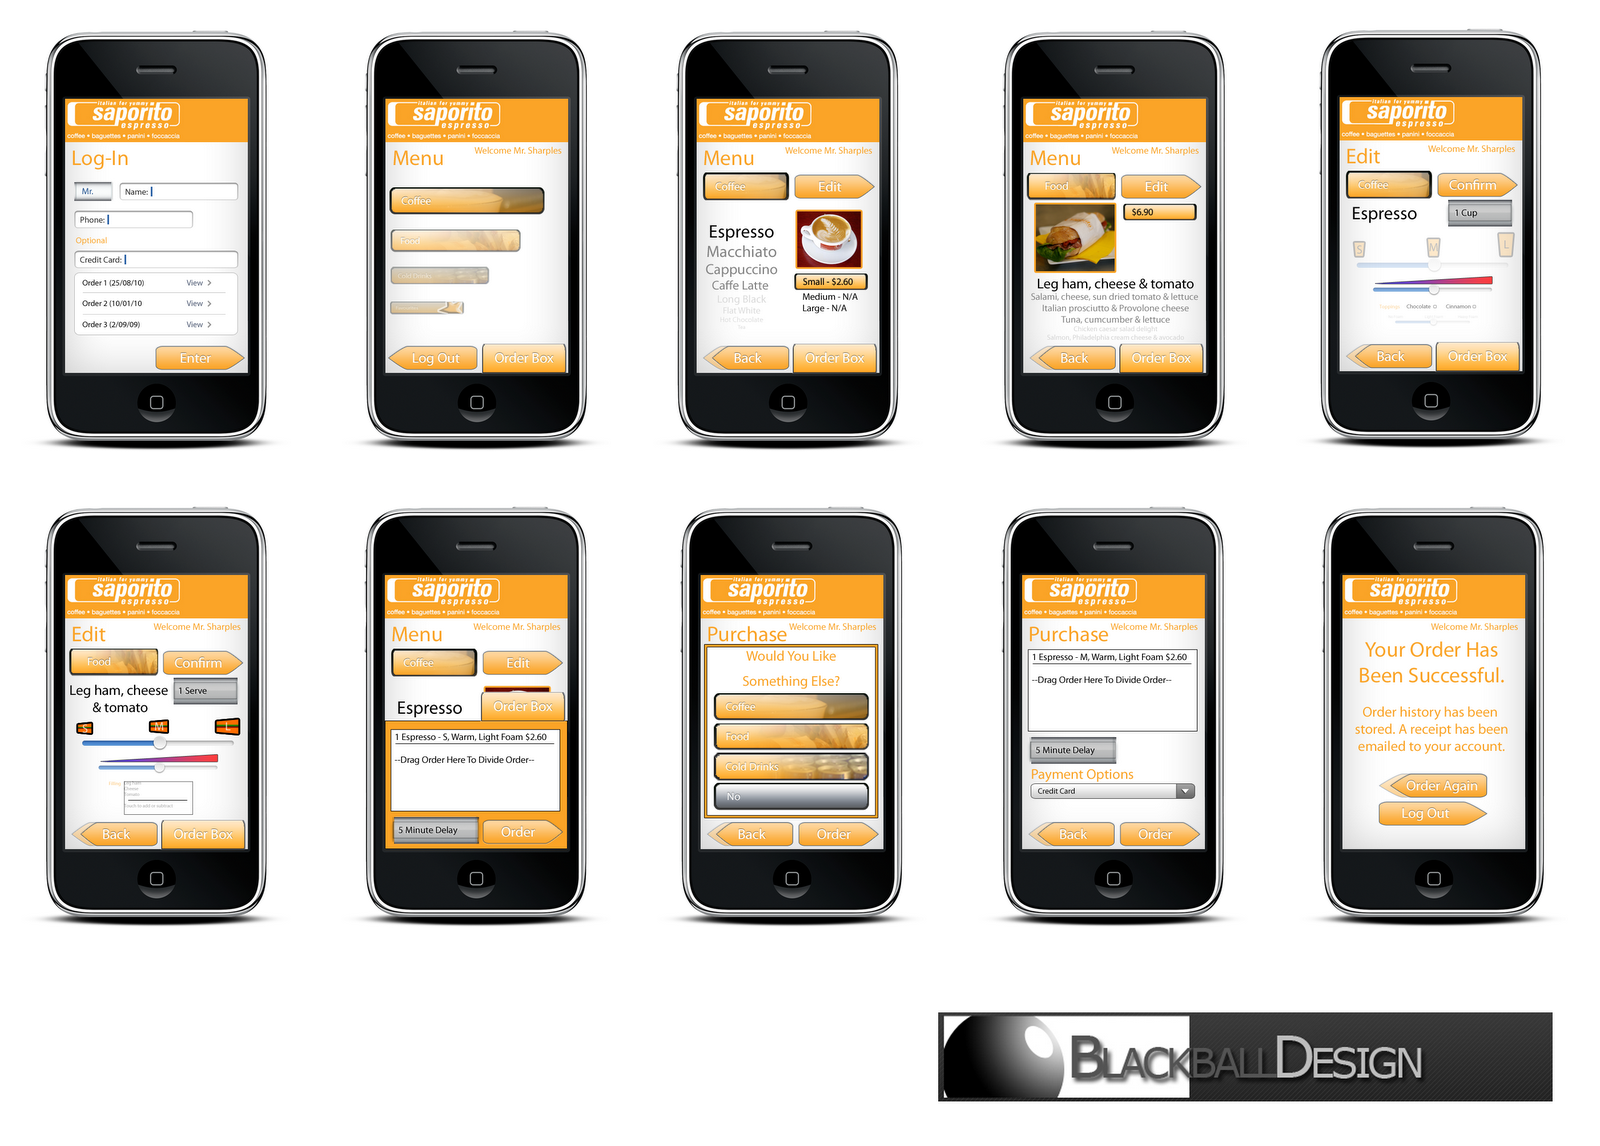 Download Blackball Design: iPhone App Mockups